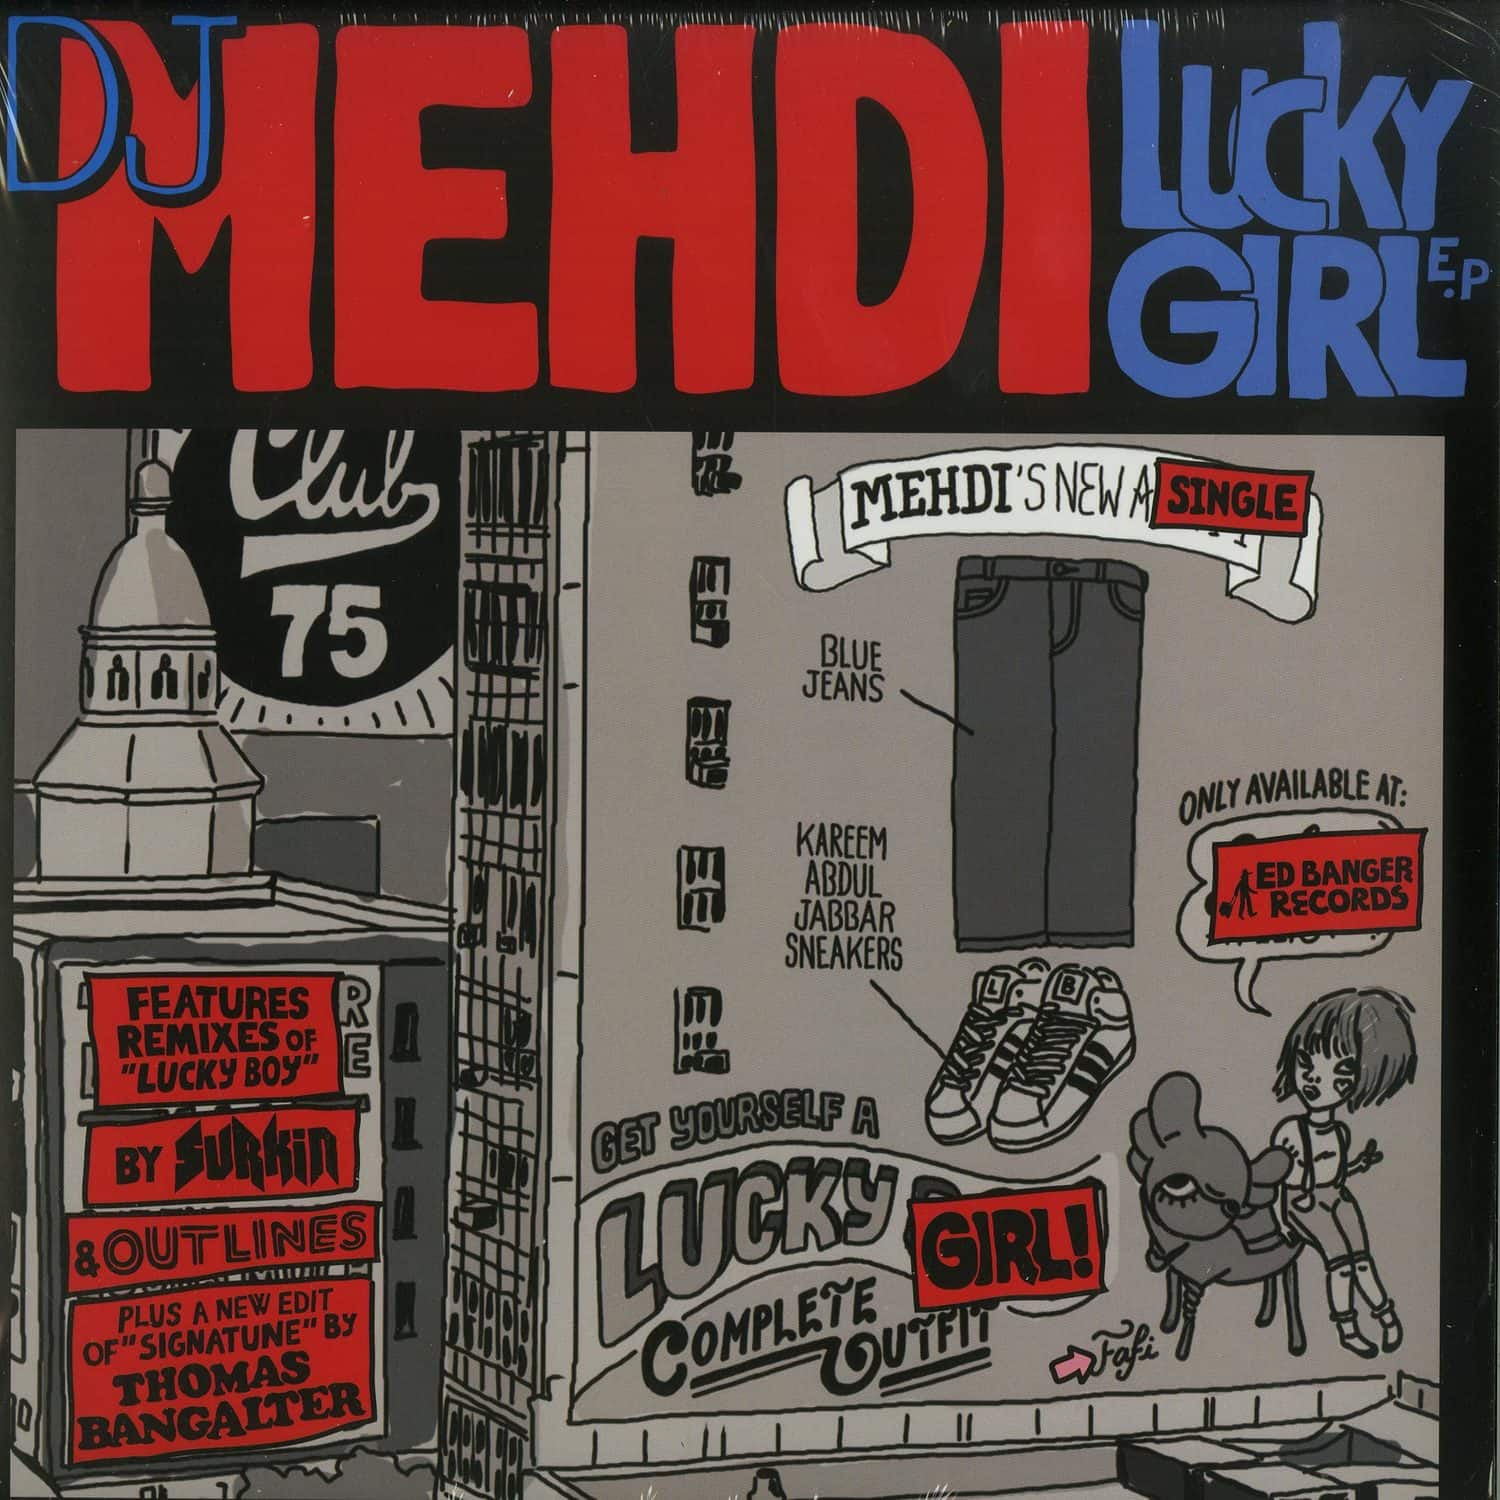 DJ Mehdi - LUCKY GIRL EP 